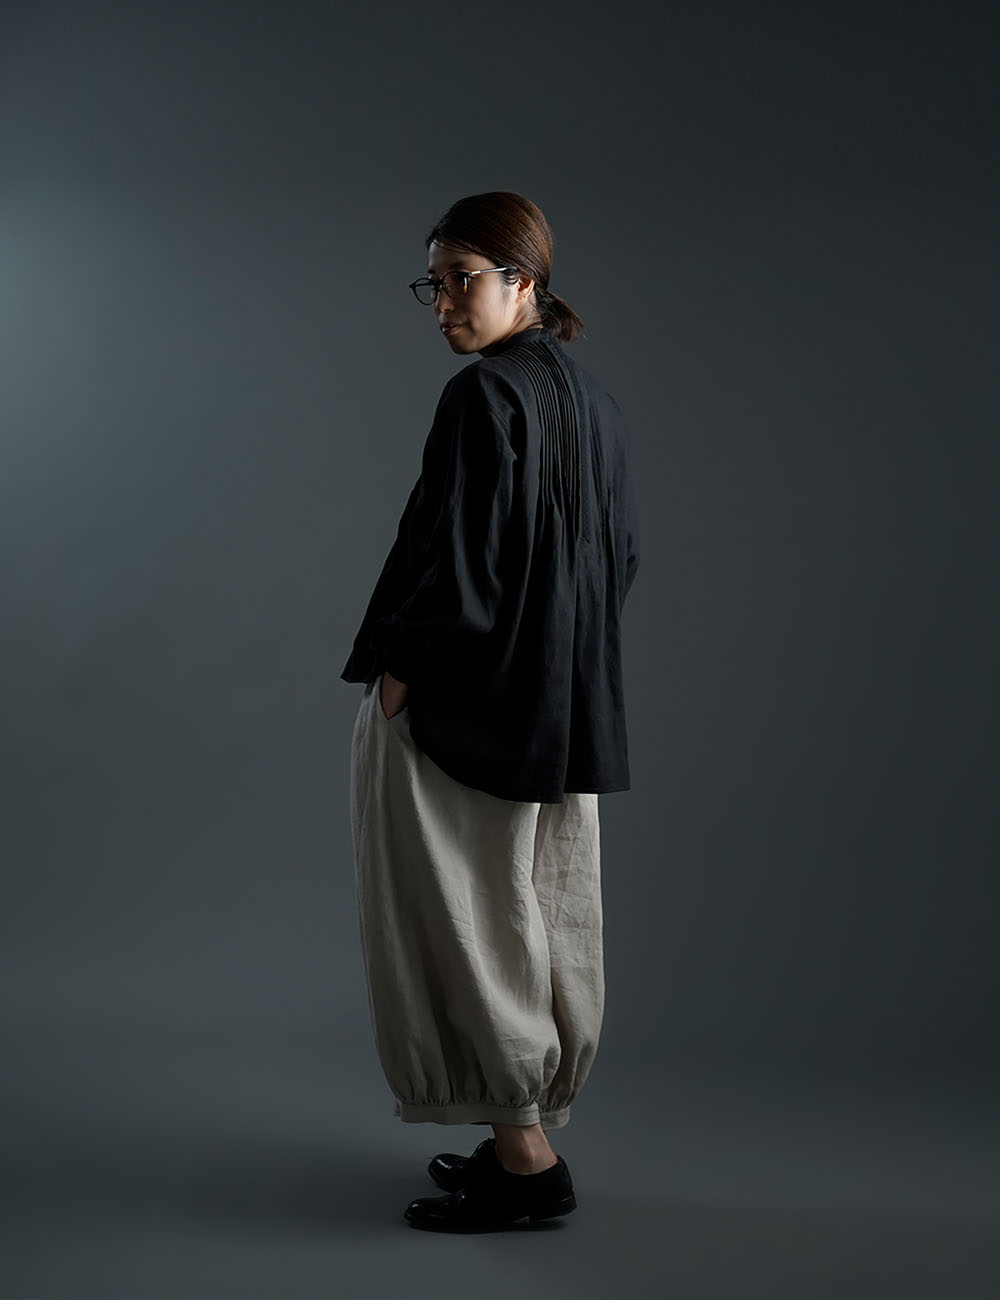 【wafu】Rosanna（ロザンナ）　Pintucked linen shirt /2色展開 t006d